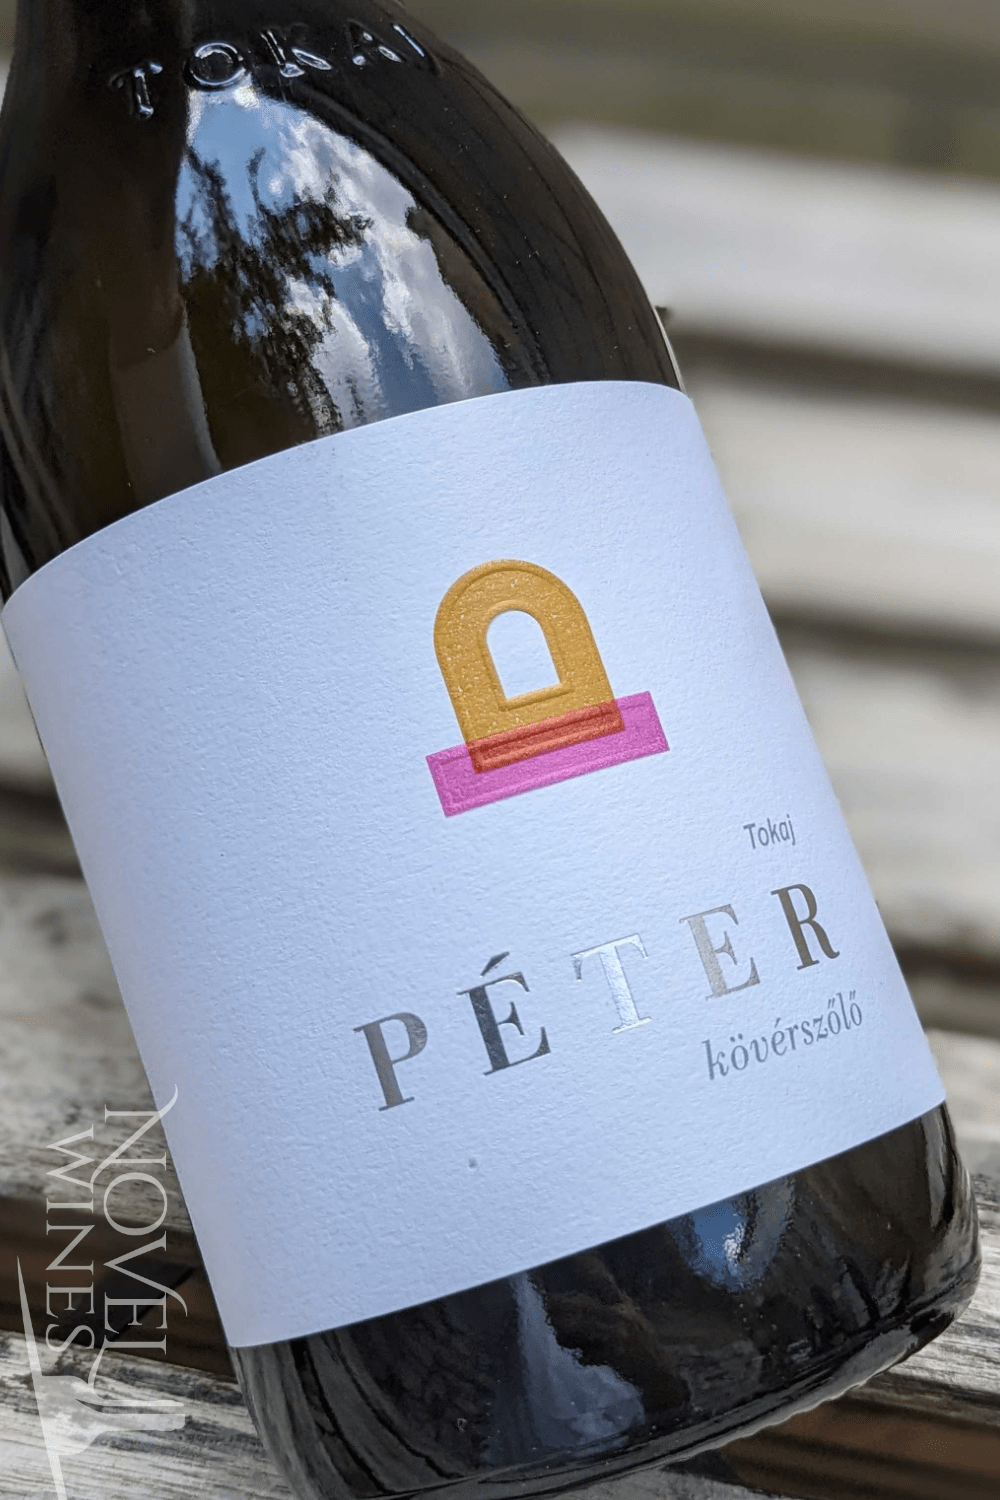 Peter Winery White Wine Peter Pince Tokaji Koverszolo 2021, Hungary